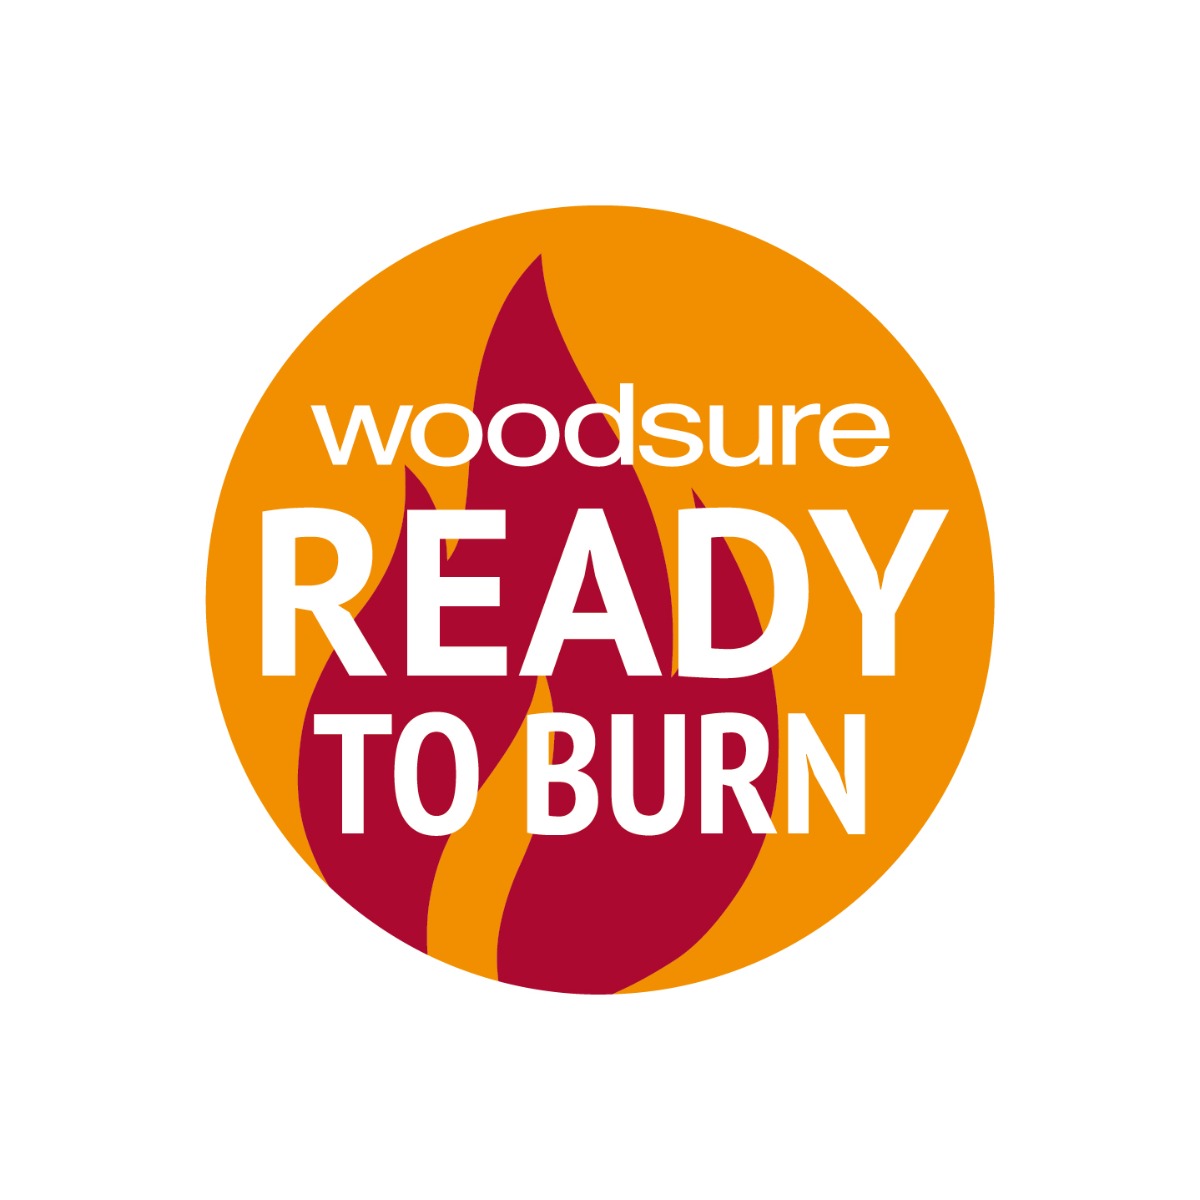 Woodsure Ready To Burn